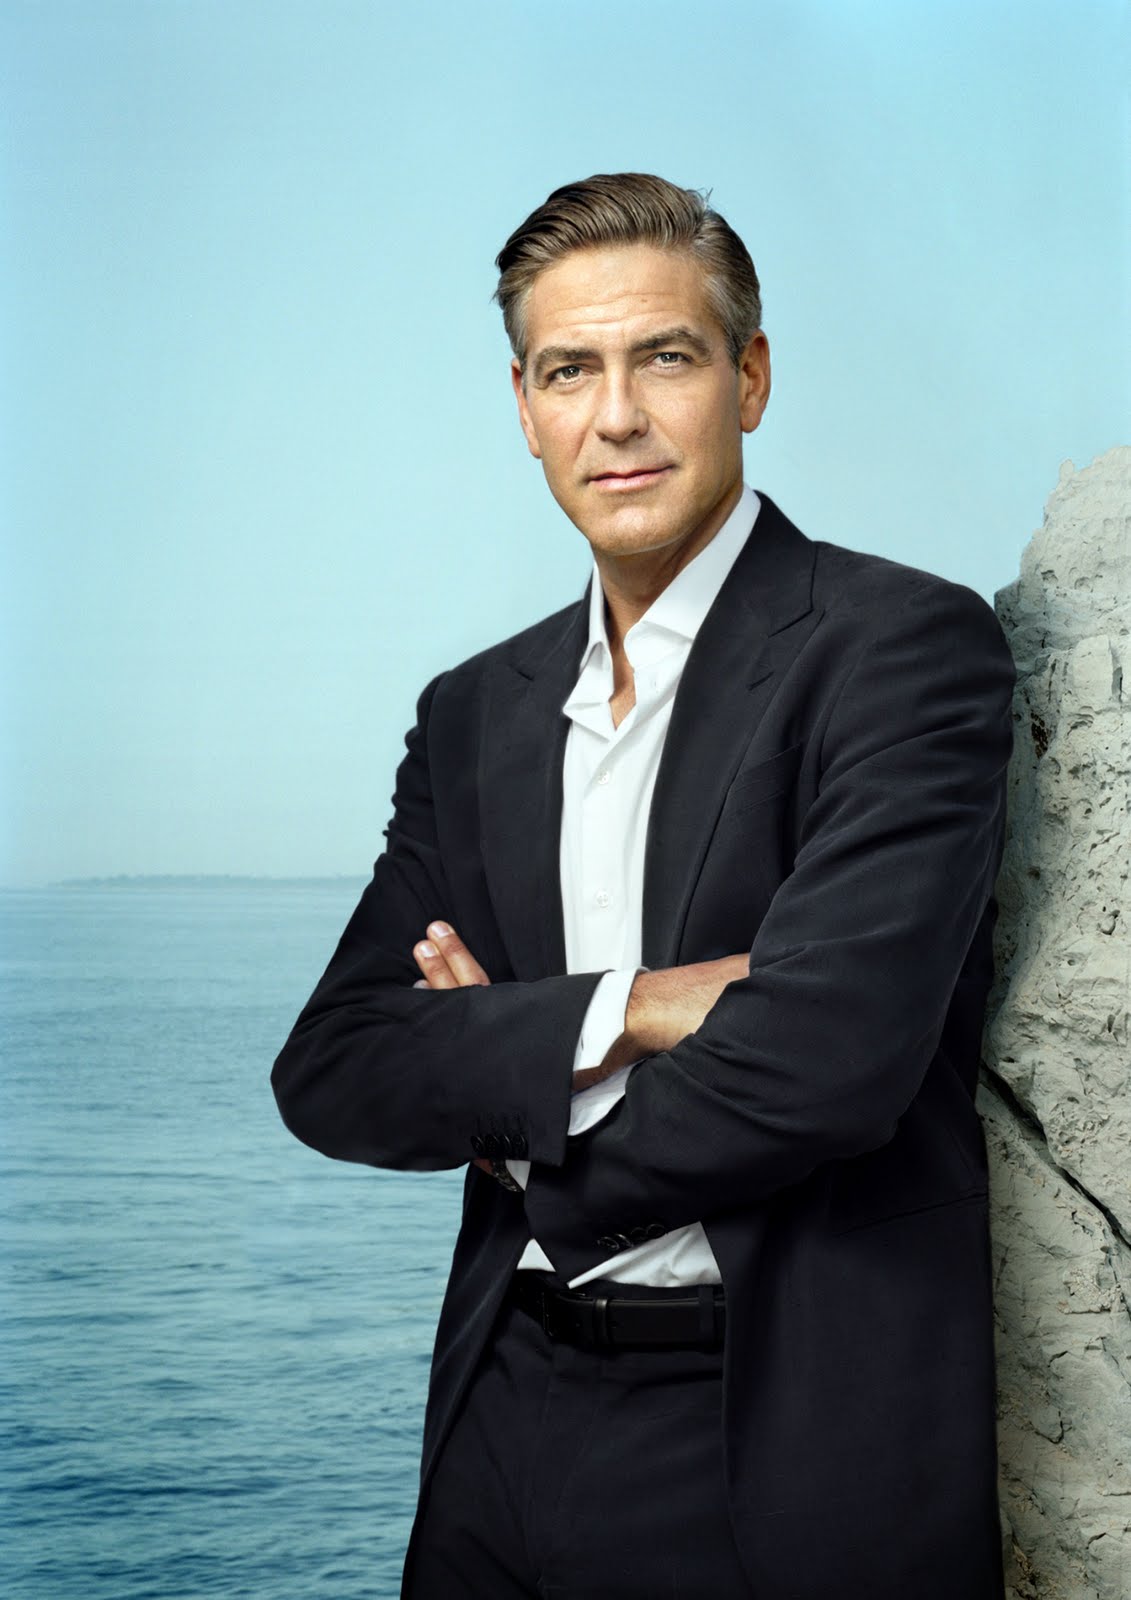 21 июля мужчина. Джордж Клуни. Кэри Грант и Джордж Клуни. Мужской портрет Джордж Клуни.